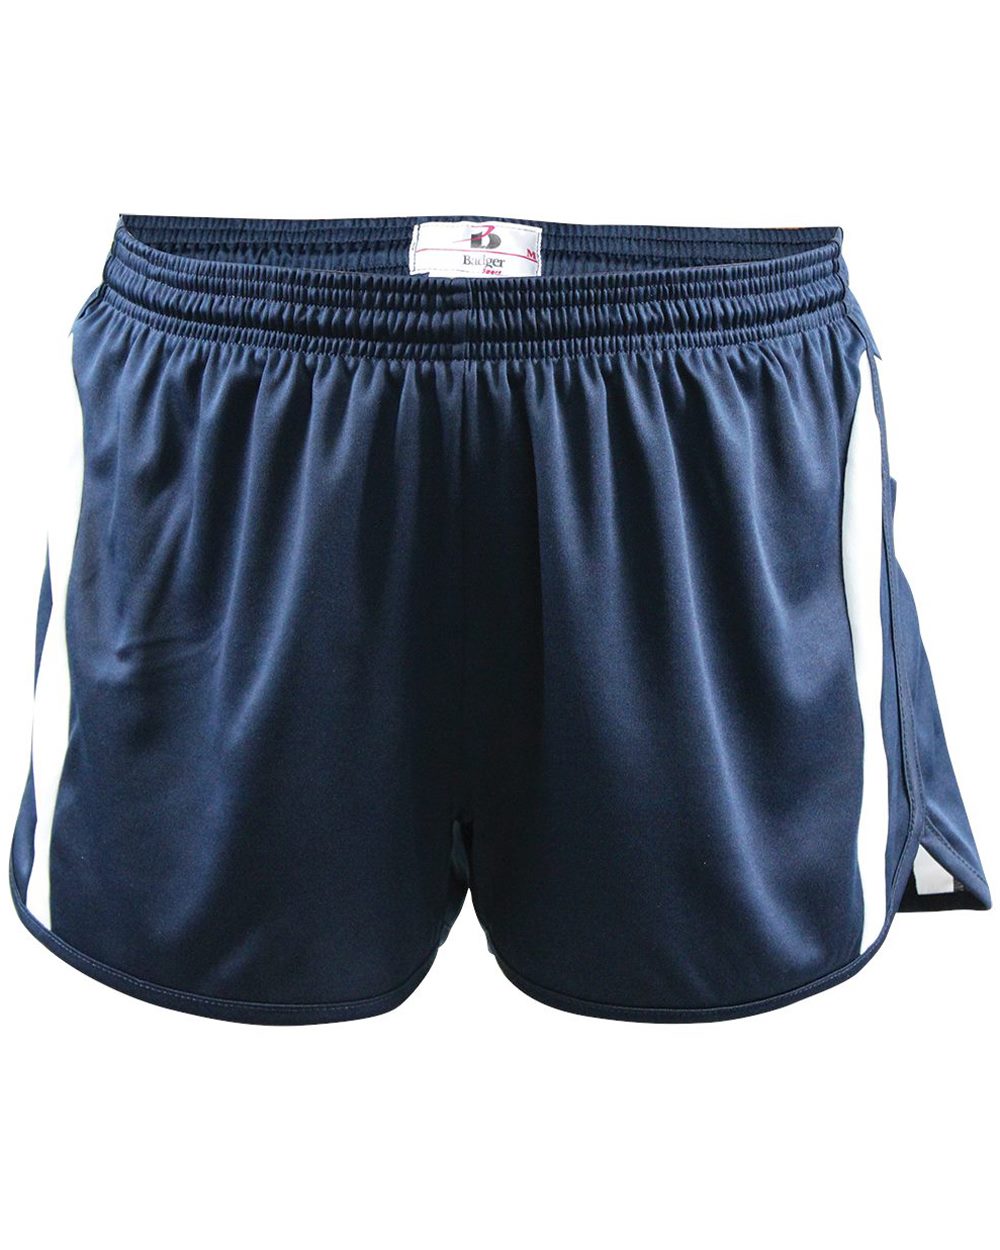 Badger Sportswear 2271 Aero Youth Shorts - From $13.08